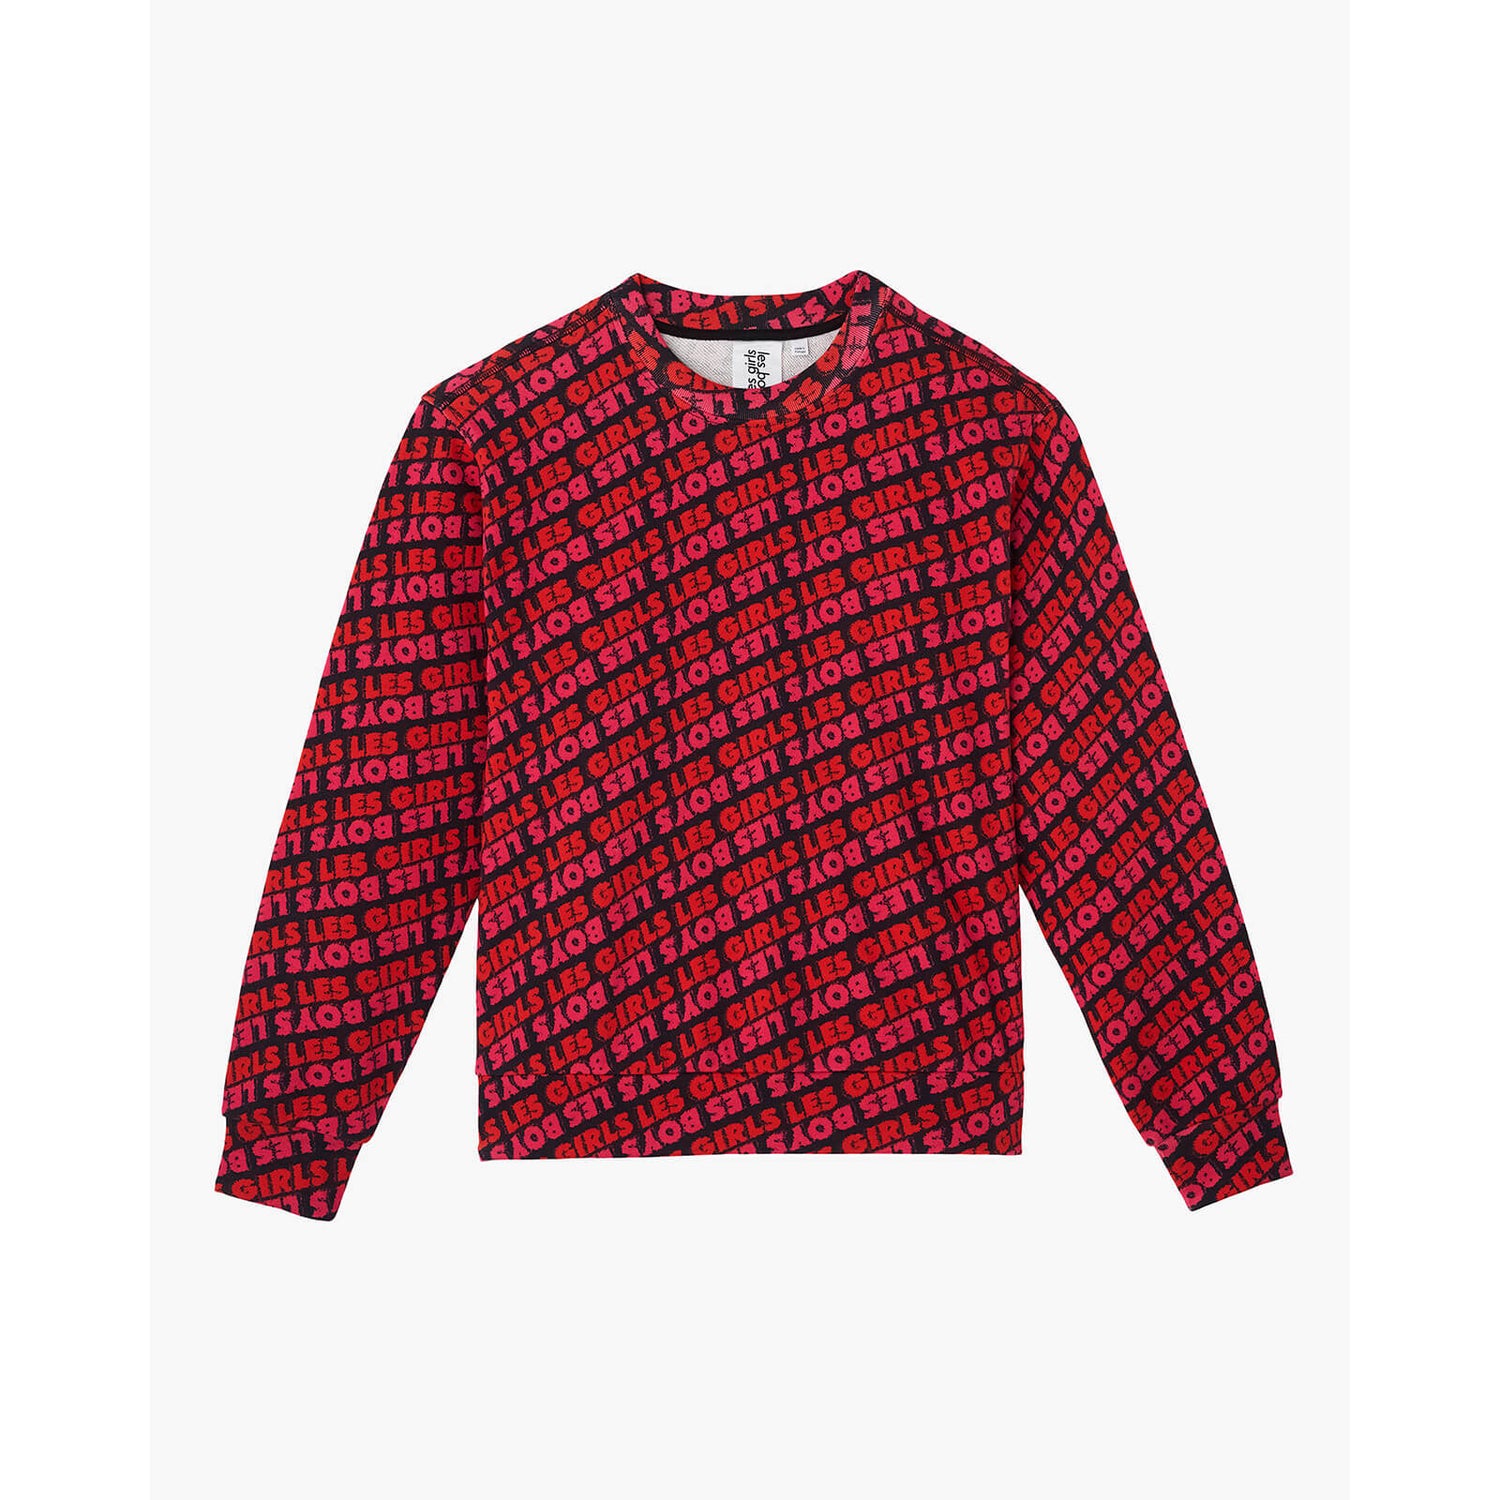 Les Girls Les Boys Women's Fuzzy Print Crew Neck Sweatshirt - Red